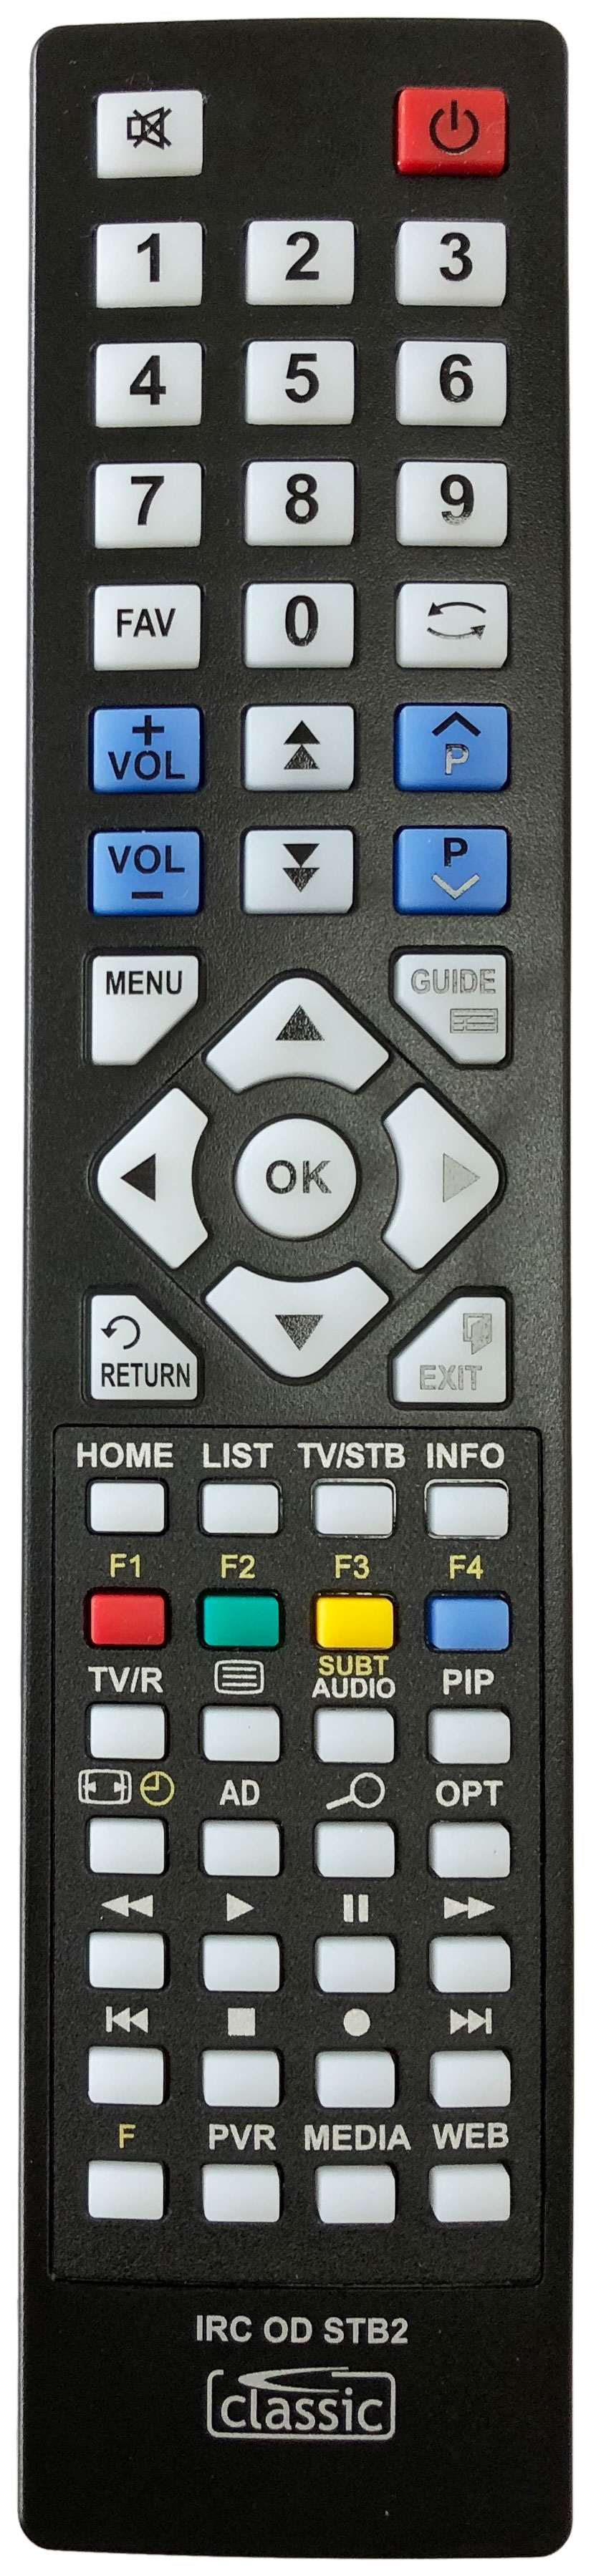 Daewoo DSD-9502T Remote Control